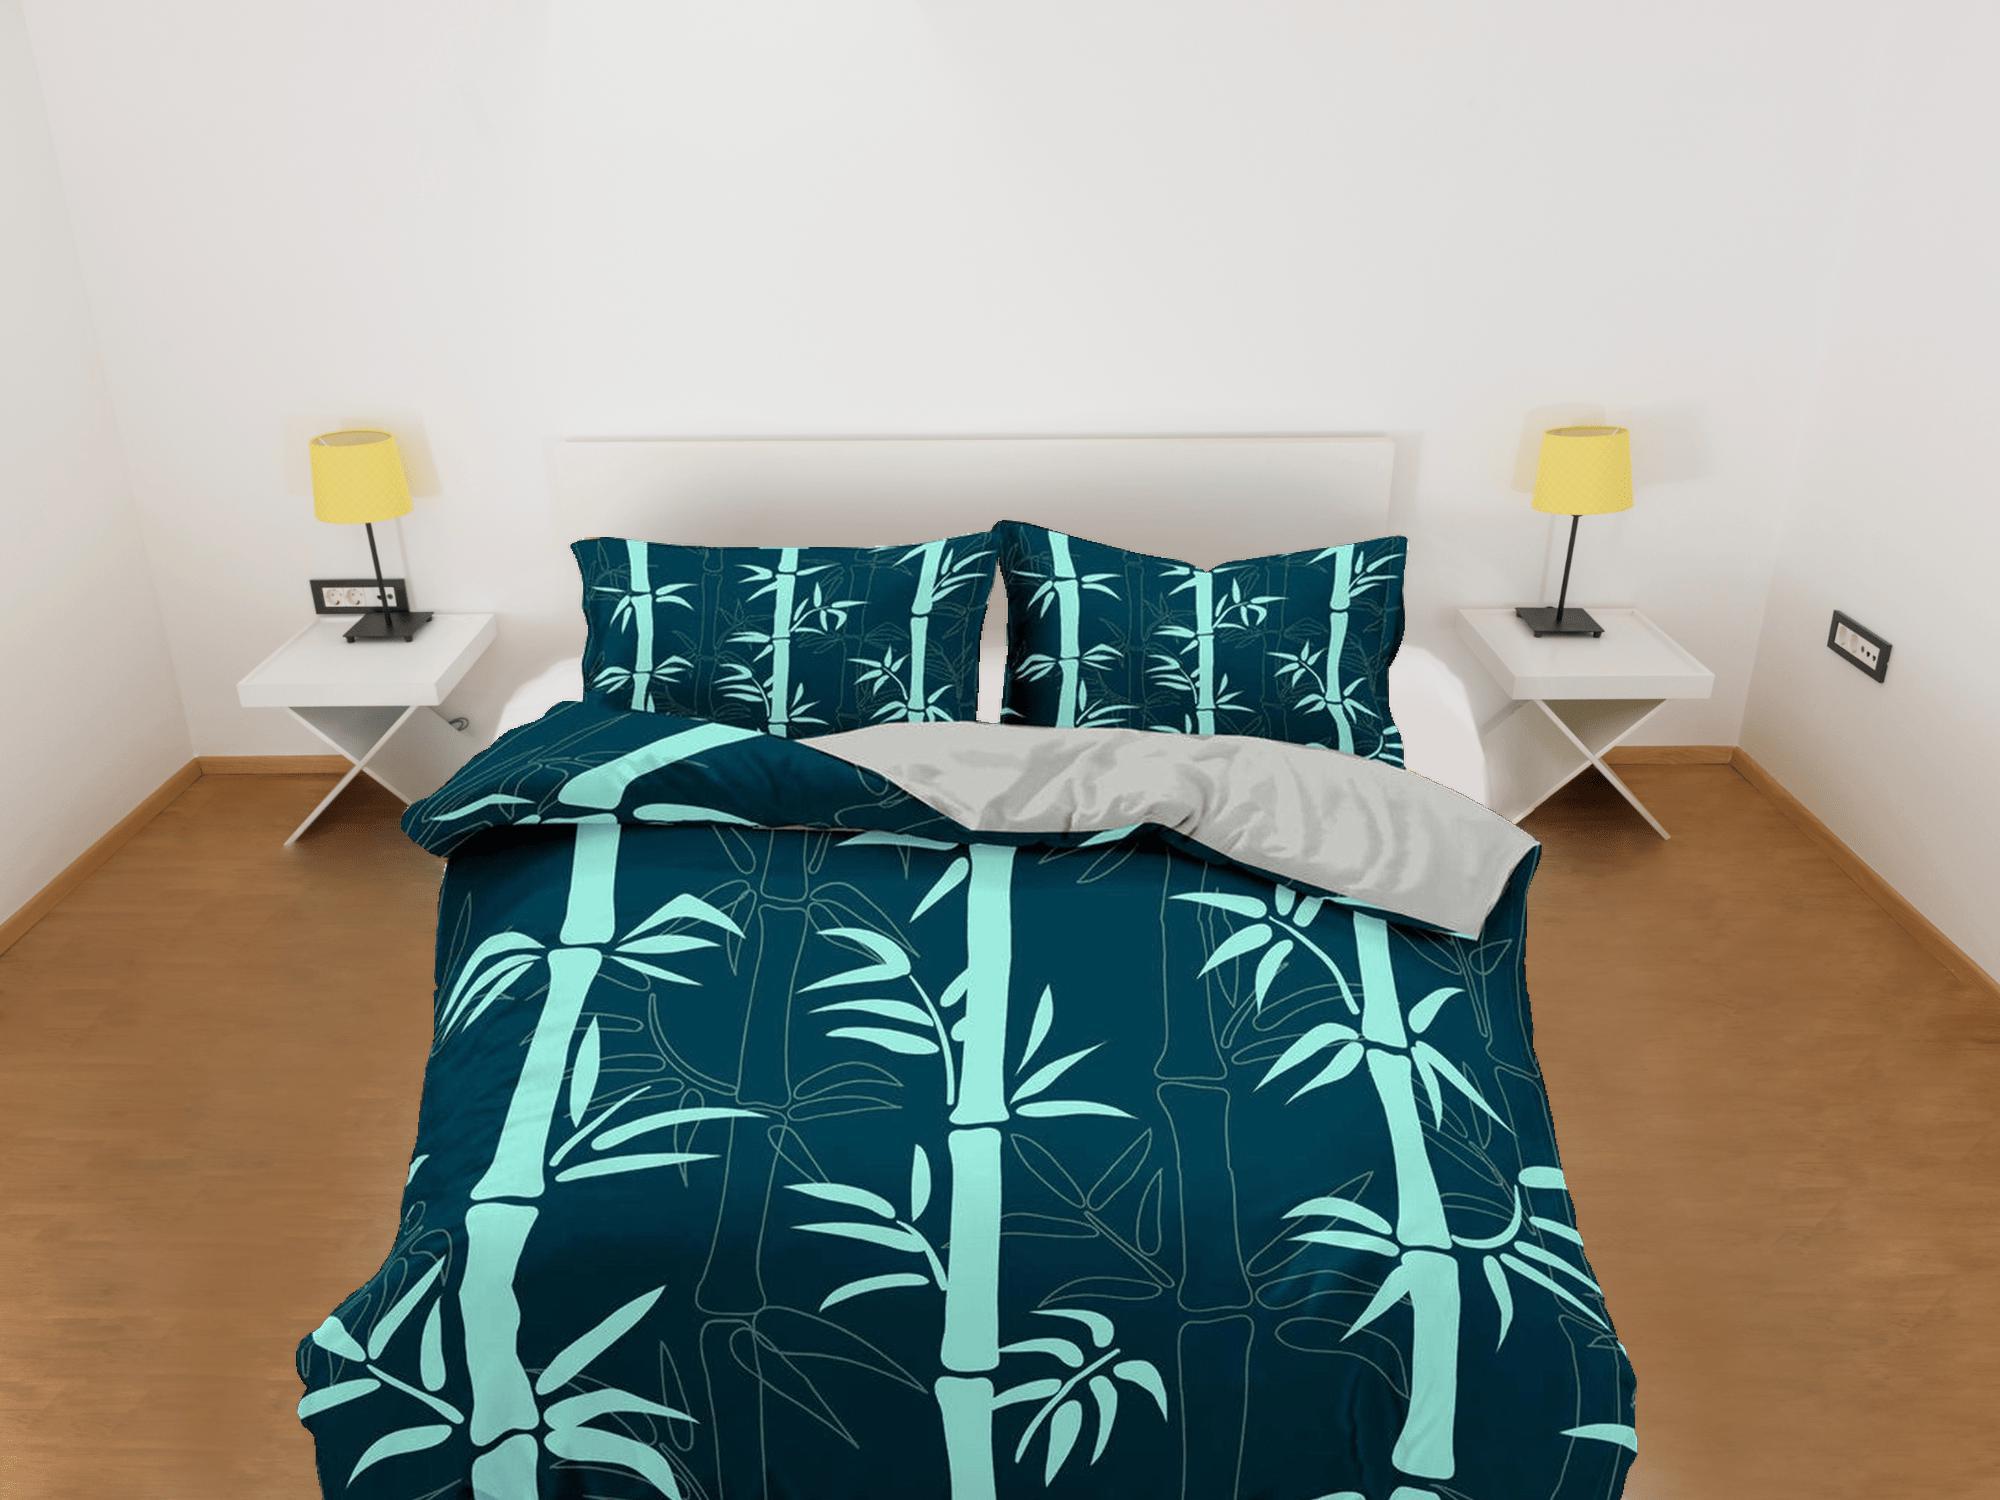 daintyduvet Botanical Duvet Cover Set Lucky Bamboo, Green Bedspread Dorm Bedding Set